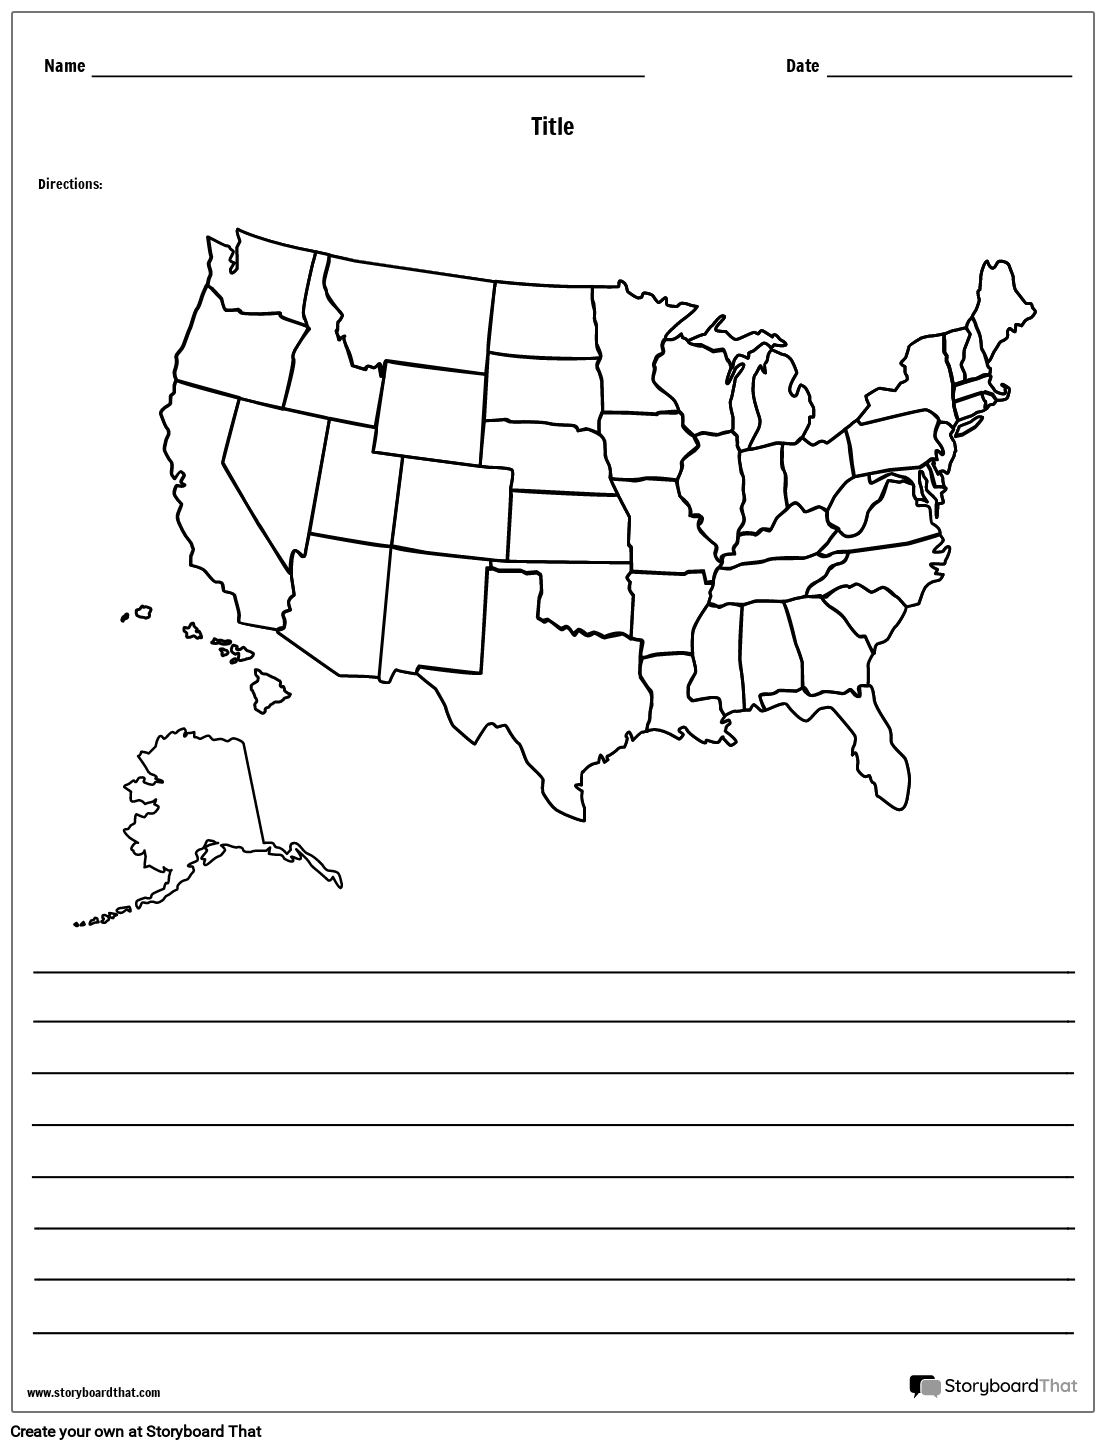 USA Kart - med Linjer